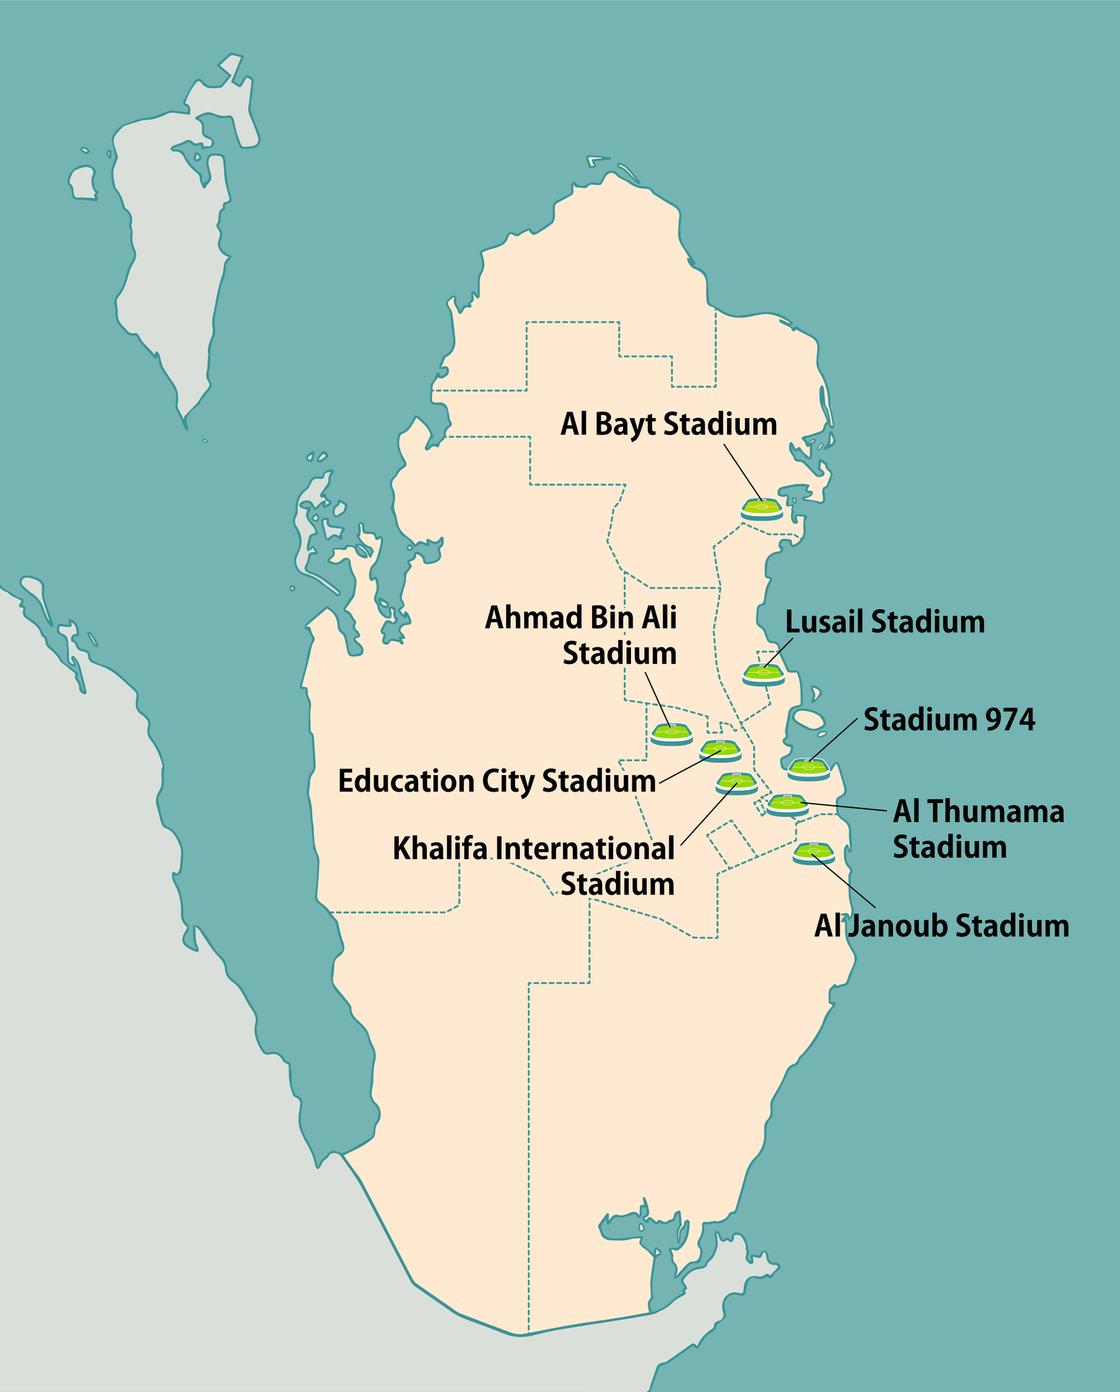 Qatar World Cup 2022 stadiums' map